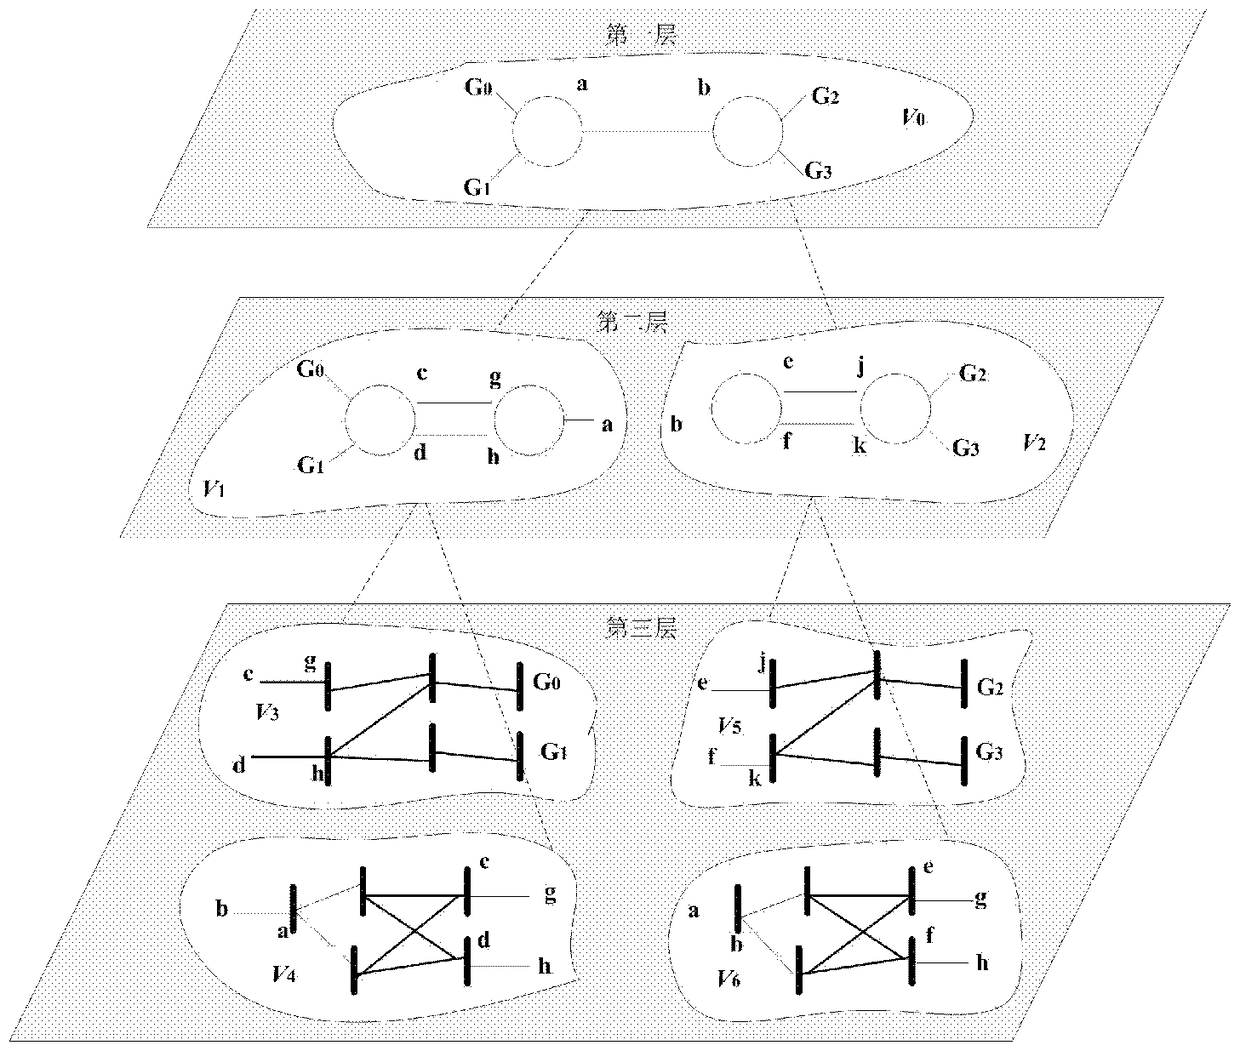 A Granular Computing Based Economic Dispatch Method of Line Power Flow